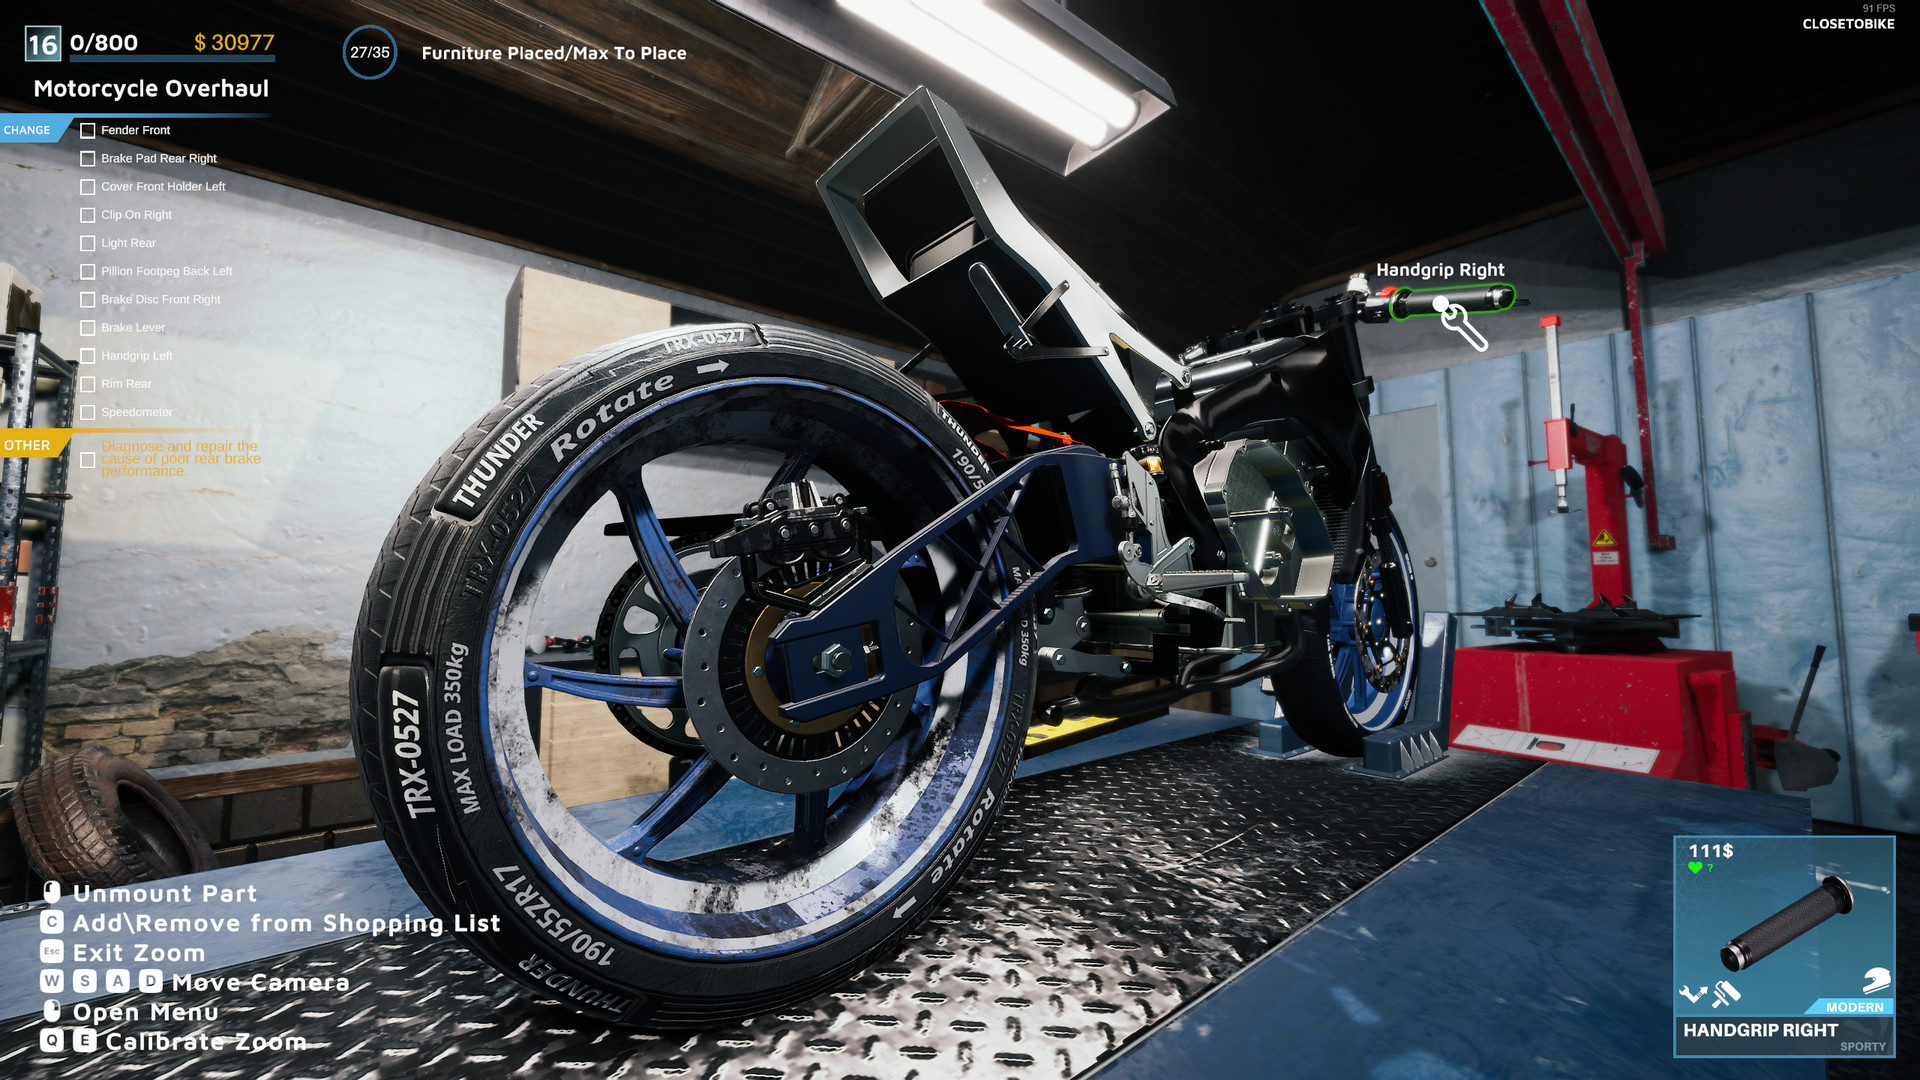 Motorcycle Mechanic Simulator 2021 EU V2 Steam Altergift